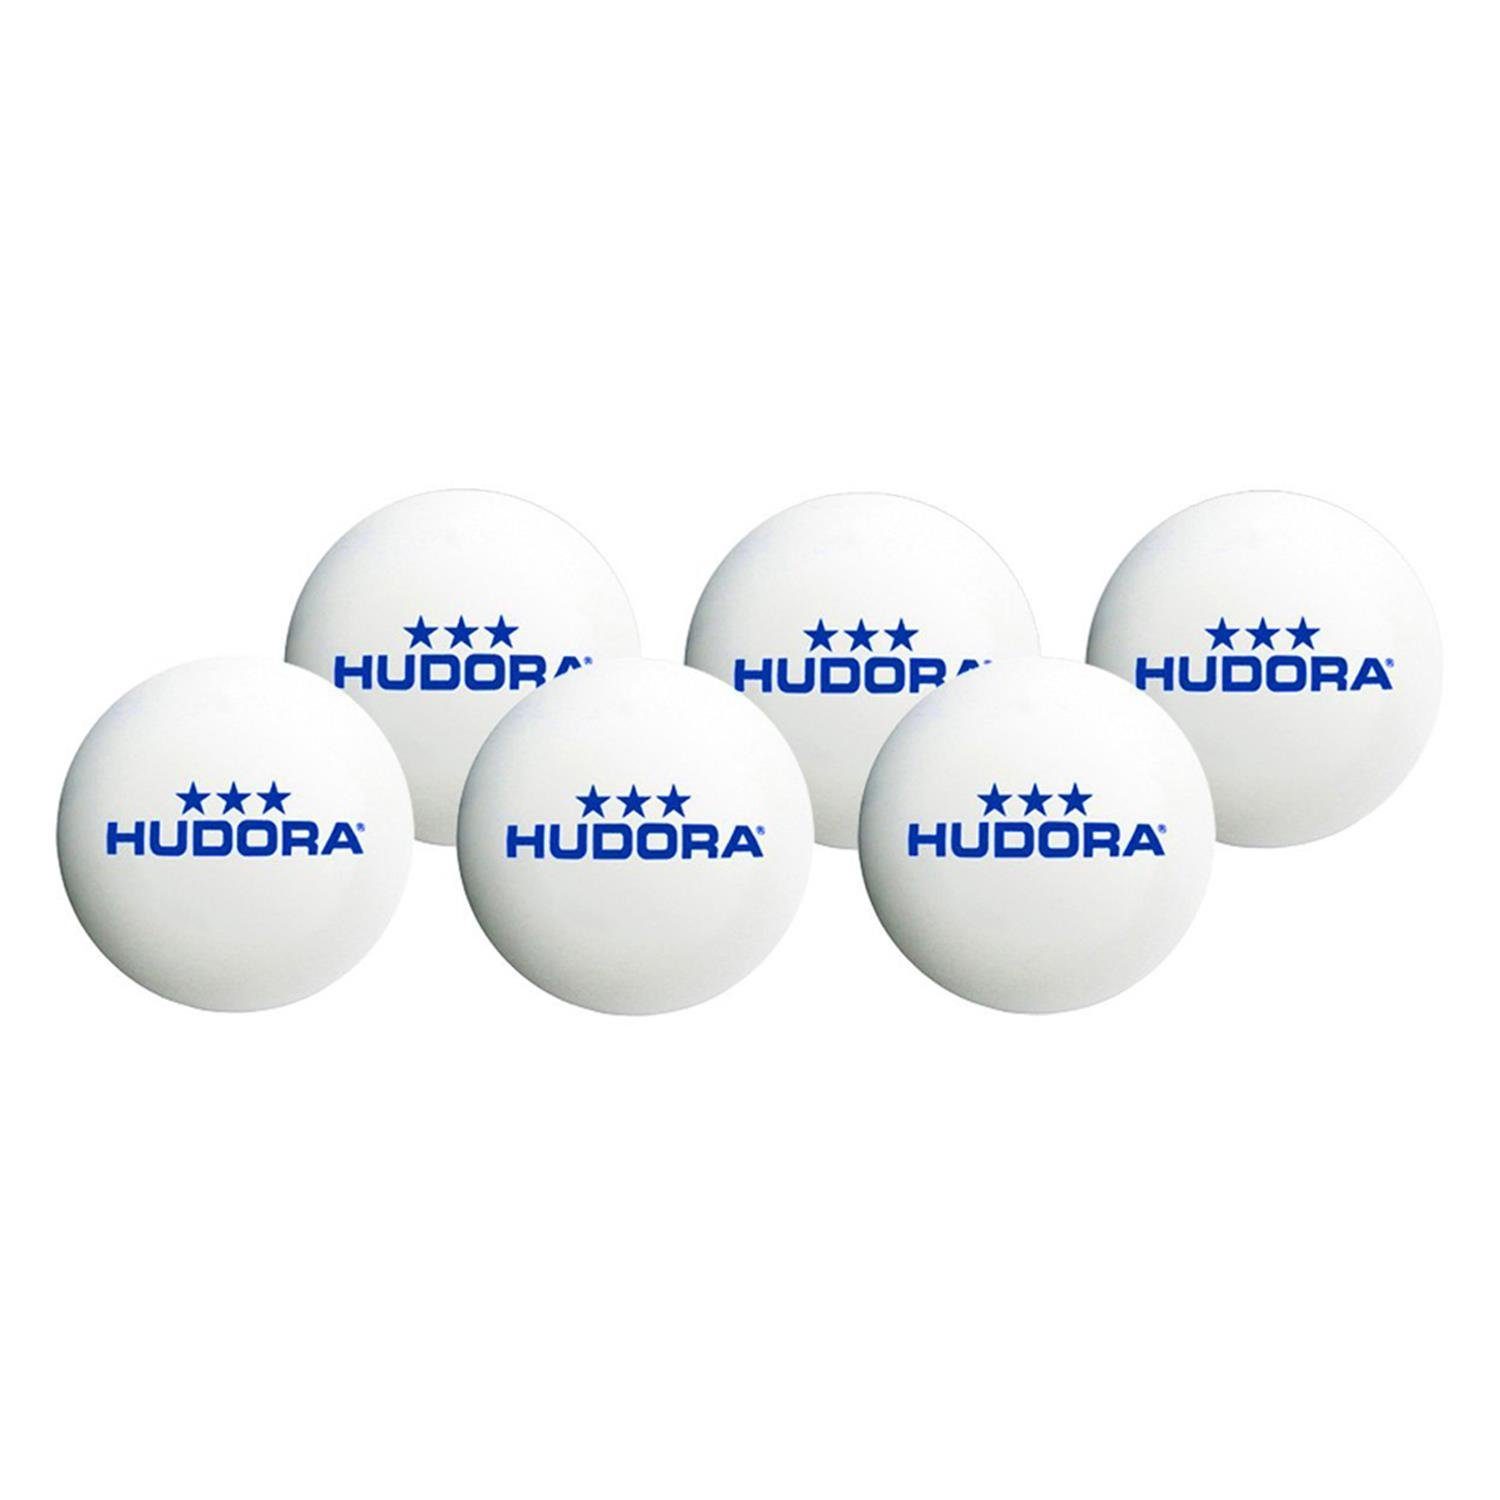 Hudora Tischtennisball 76277 Tischtennisbälle ***, 6 Stück